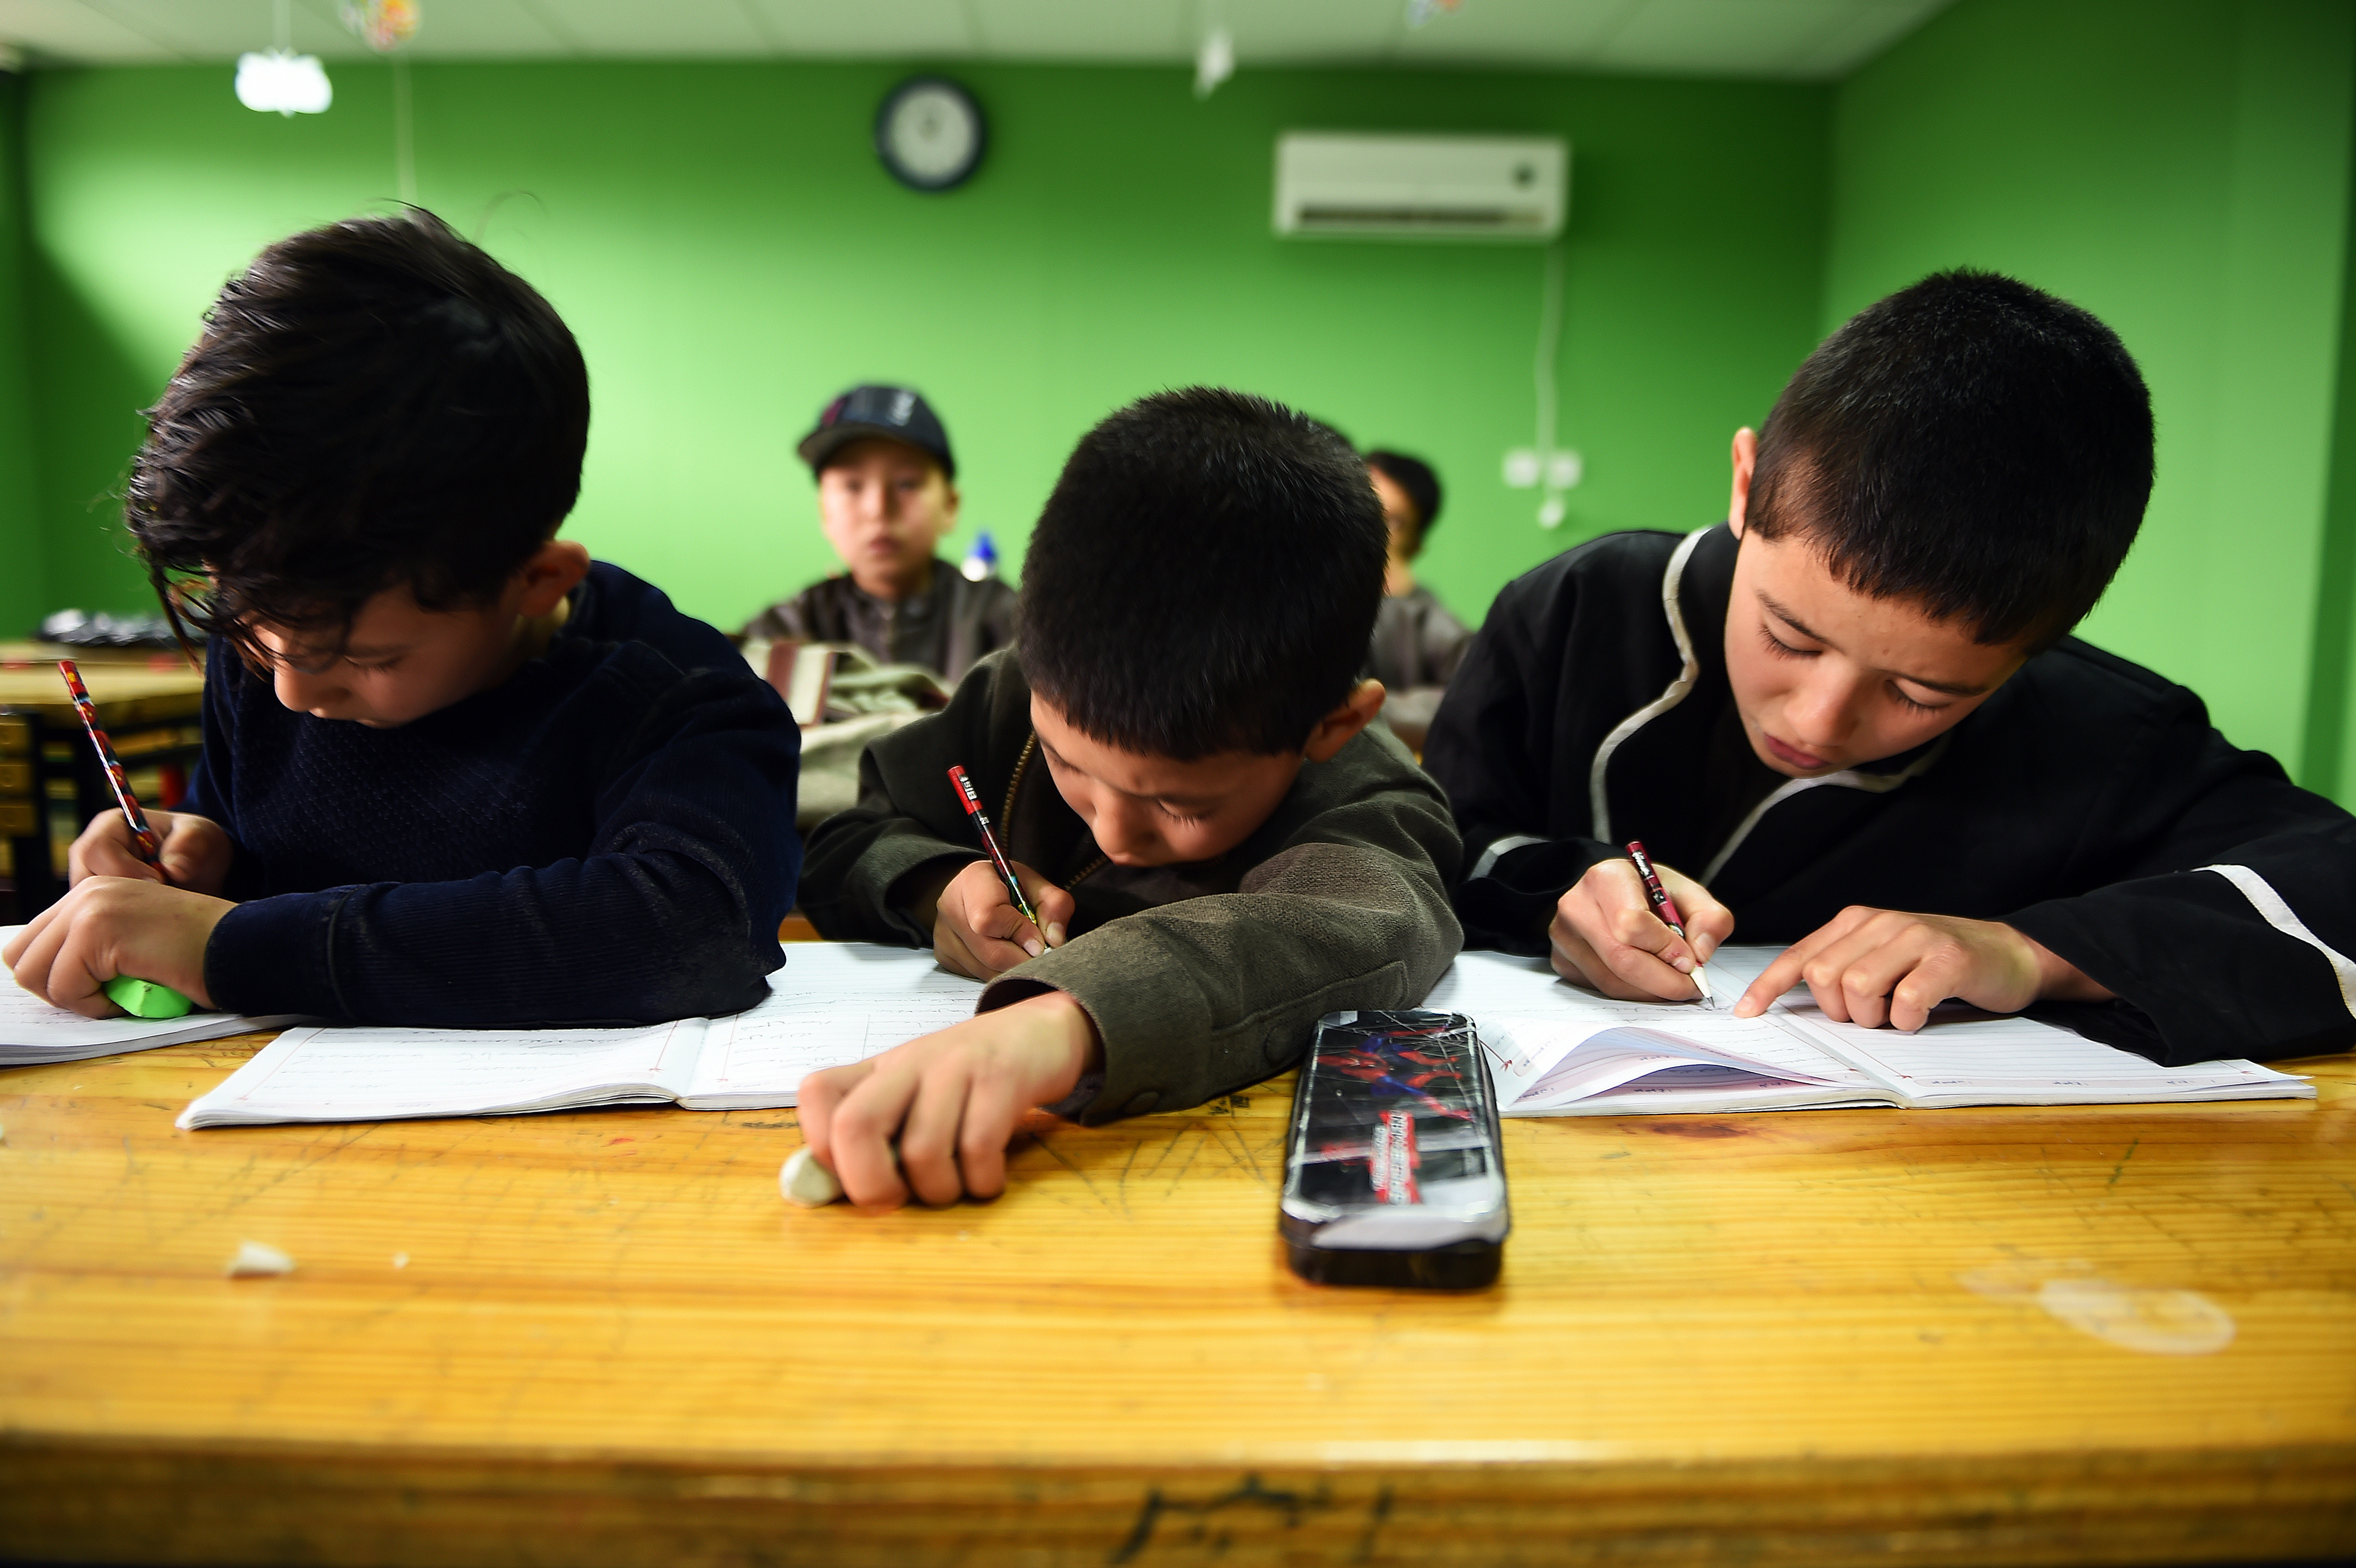 Afghan boys in classroom